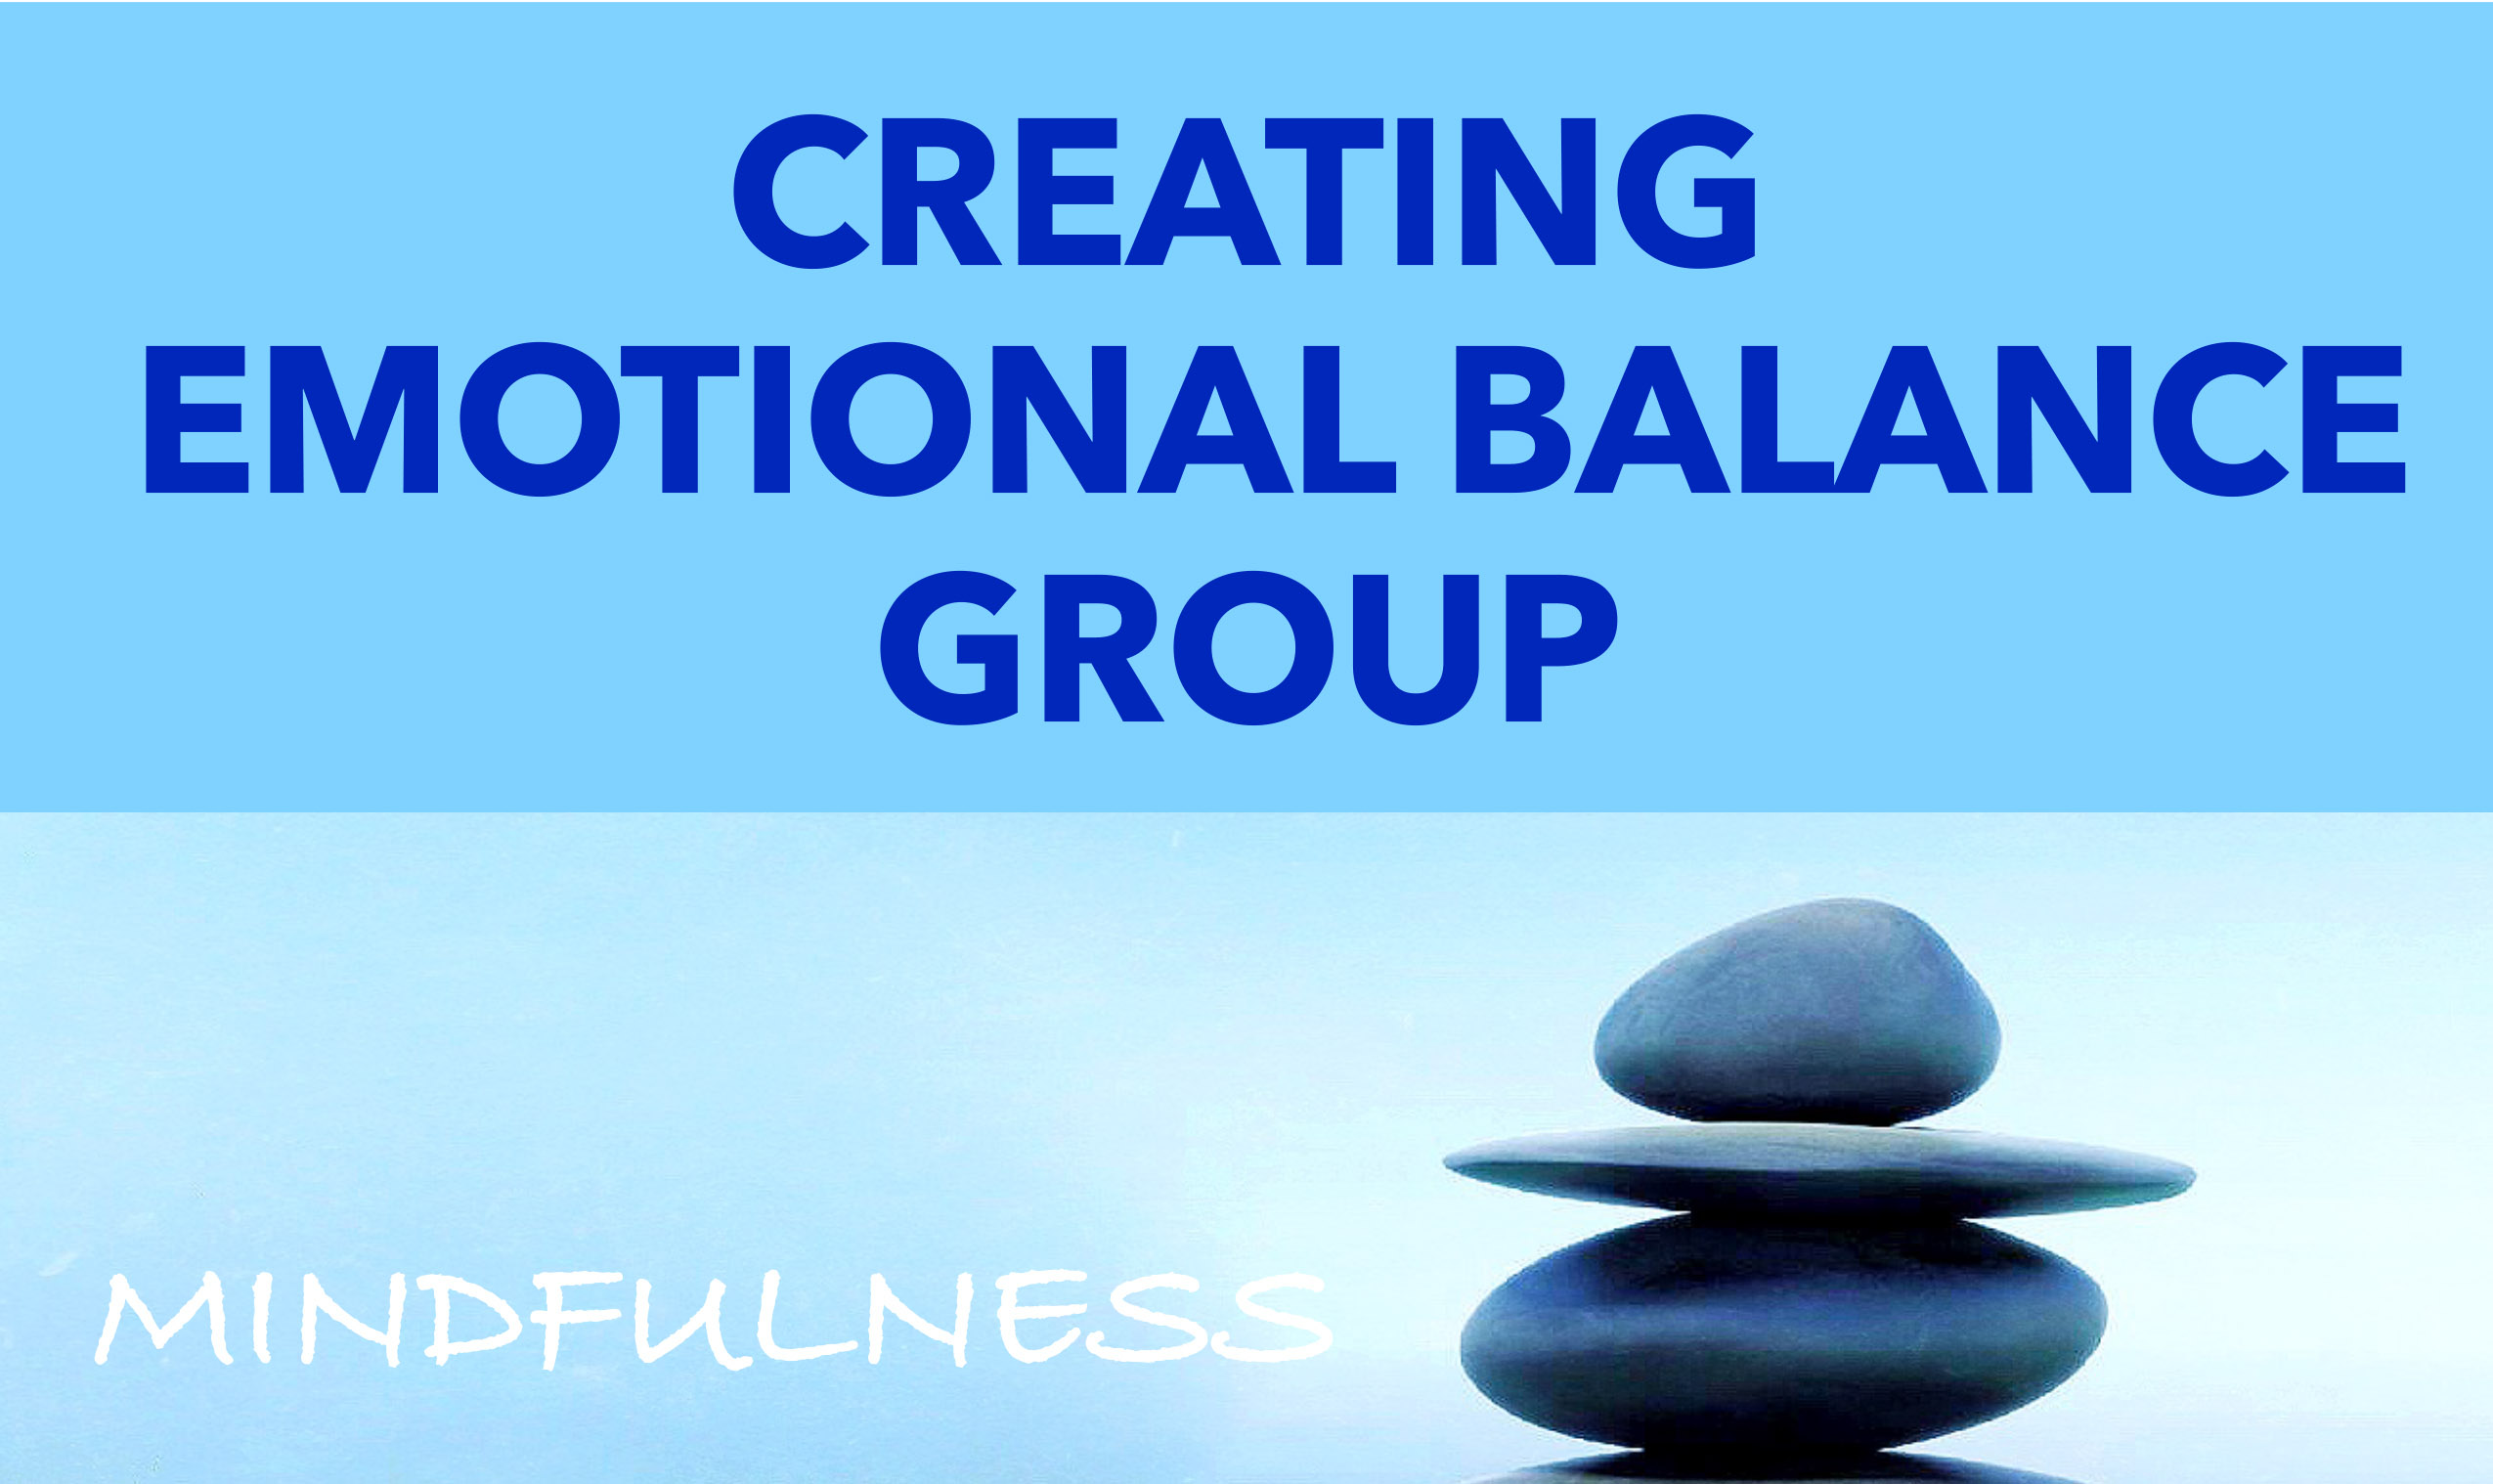 Creating Emotion Balance Group flyer